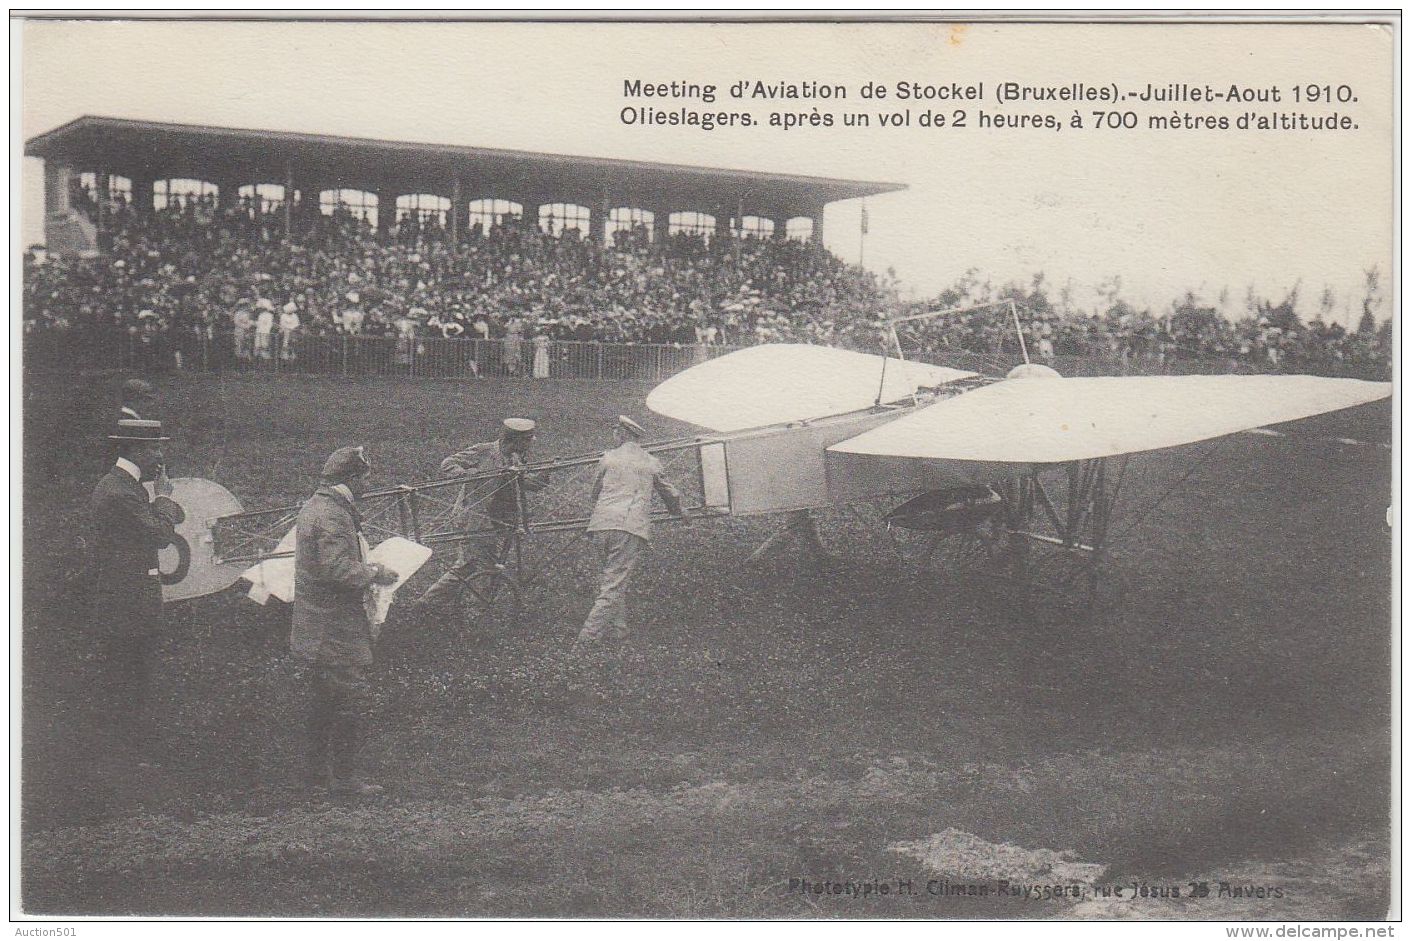 27115g   MEETING D'AVIATION STOCKEL 1910  - OLIESLAGERS APRES UN VOL DE 2 HEURES A 700 METRES D'ALTITUDE - St-Pieters-Woluwe - Woluwe-St-Pierre